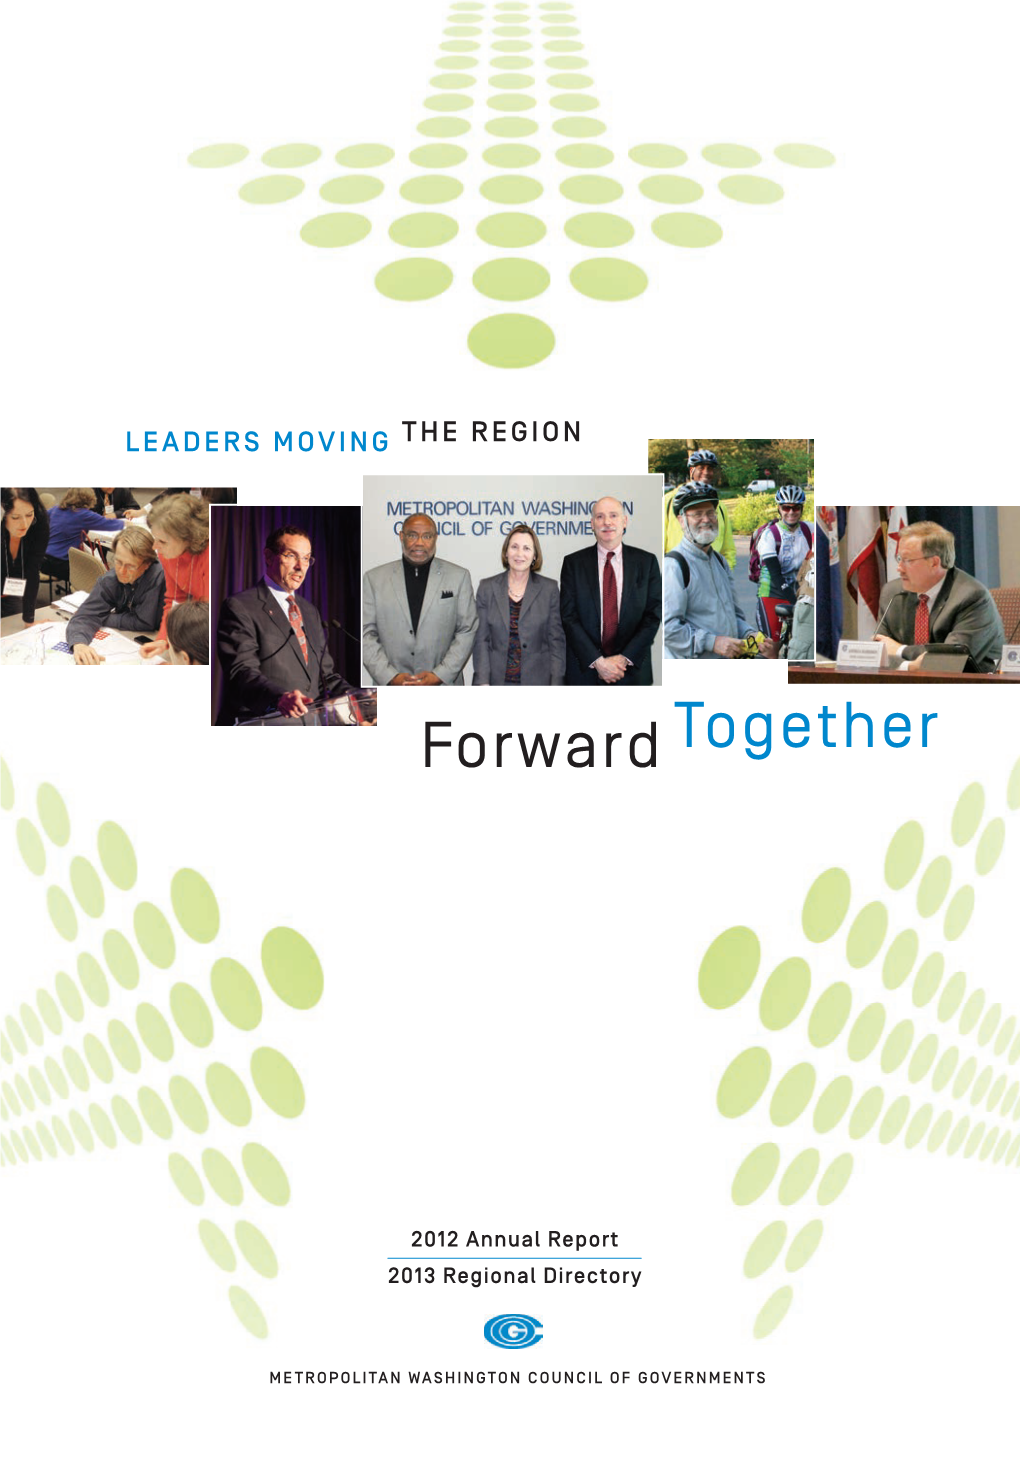 Annual Report, 2012, & Regional Directory, 2013